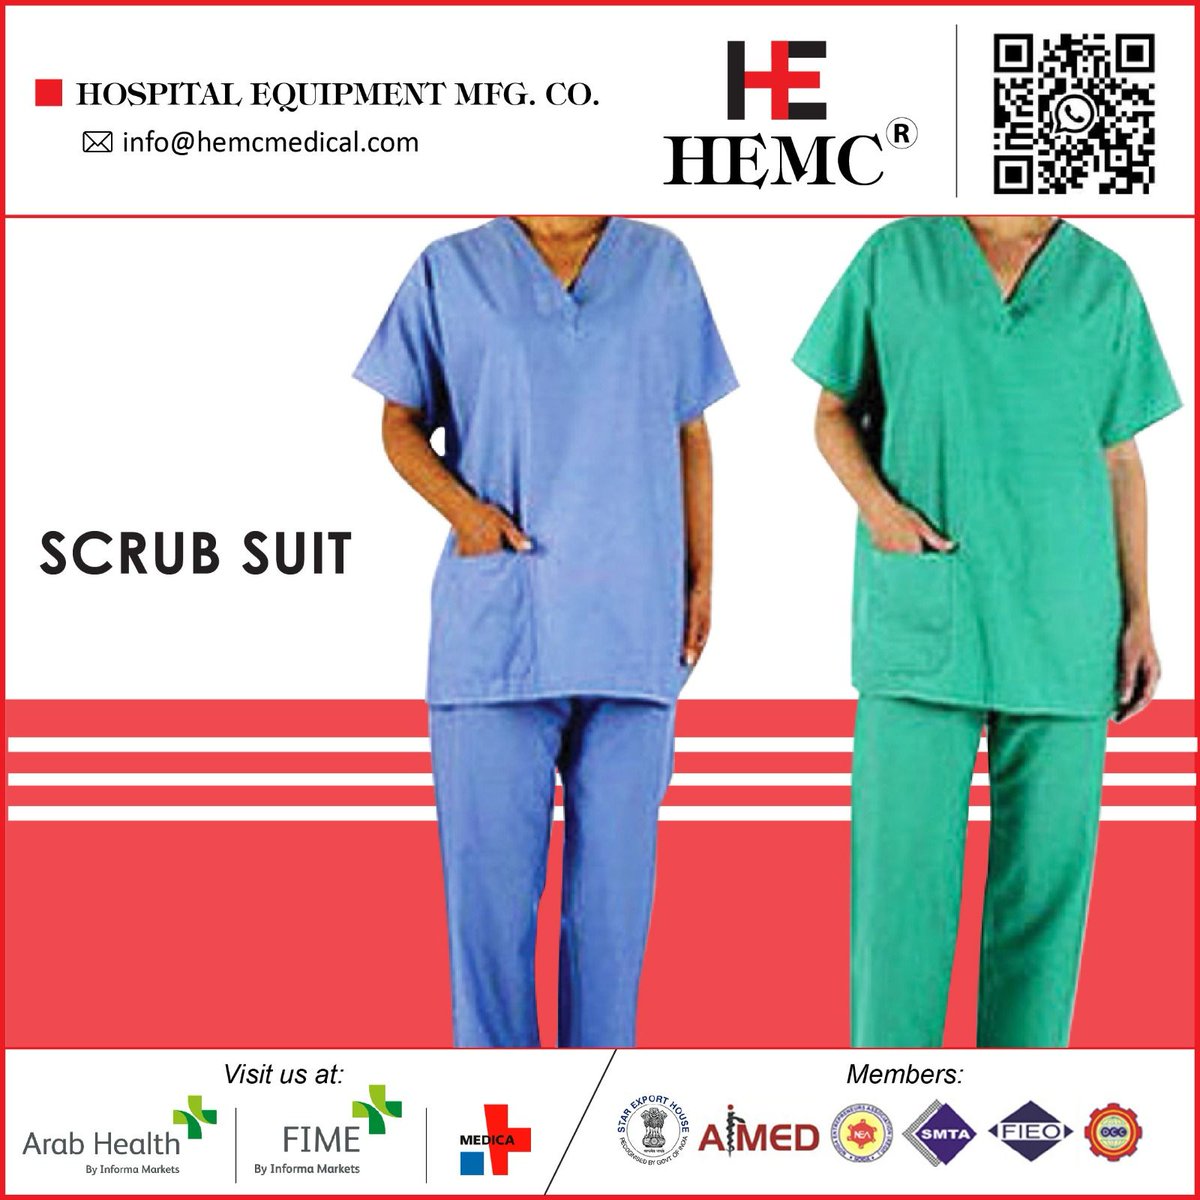 #scrubsuit #suit #disposable #hospital #medicalprofessional #medicalequipment #medicaldevices #medicalinstruments #babycare #hospitalequipment #surgery #surgeon #manufacturer #exportquality #india #hemcmedical #hemcindia